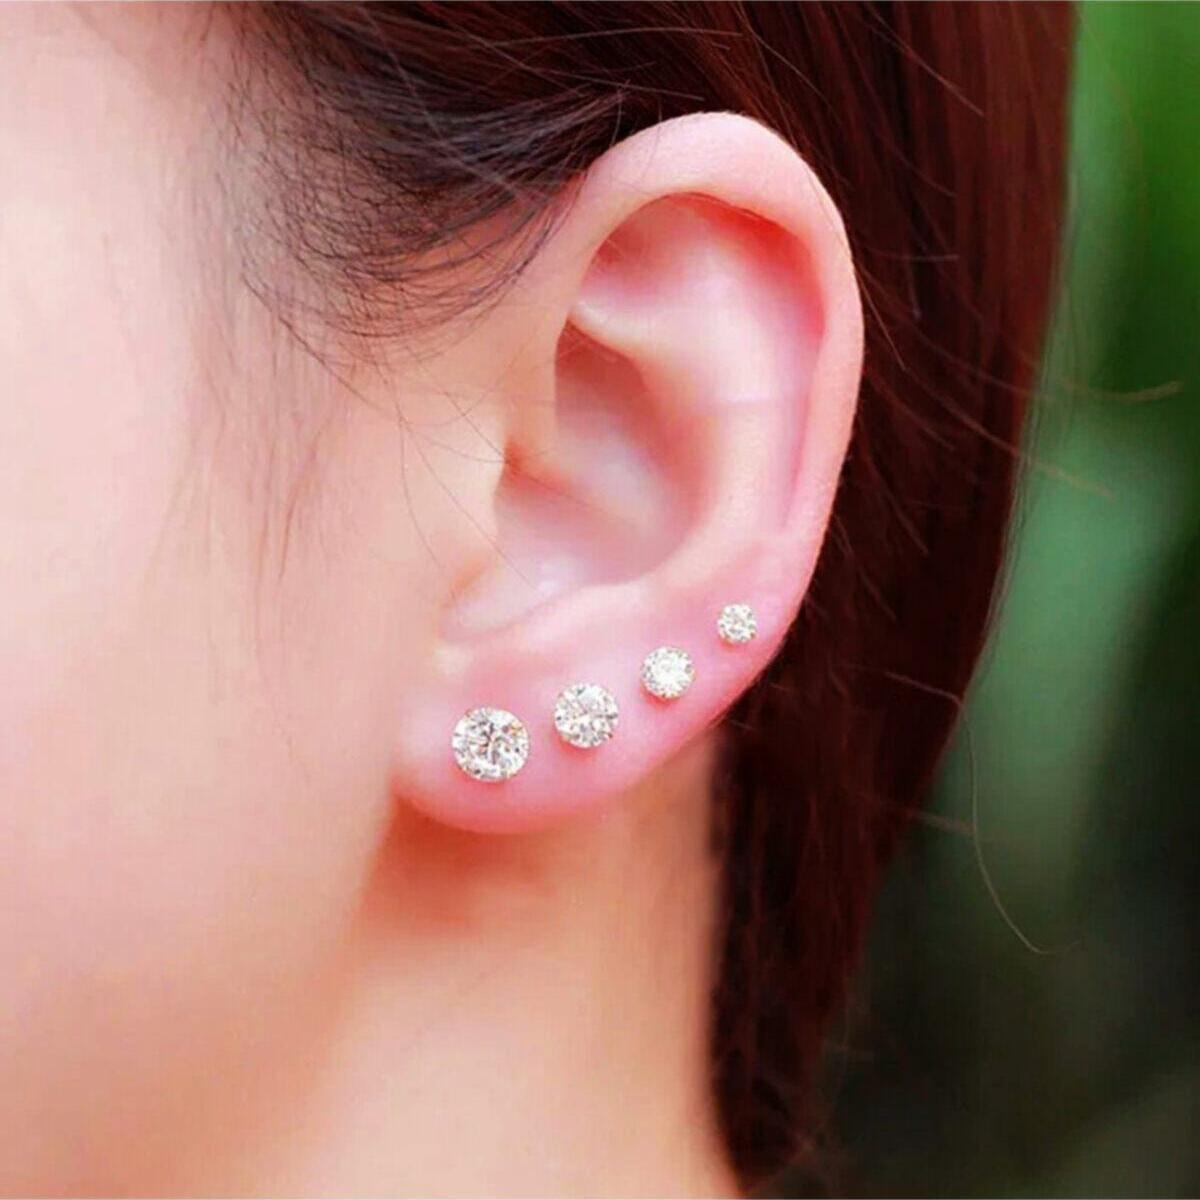 4 Pairs Solitaire Stud Earrings • Solitaire Diamond Stud Earrings - Trending Silver Gifts